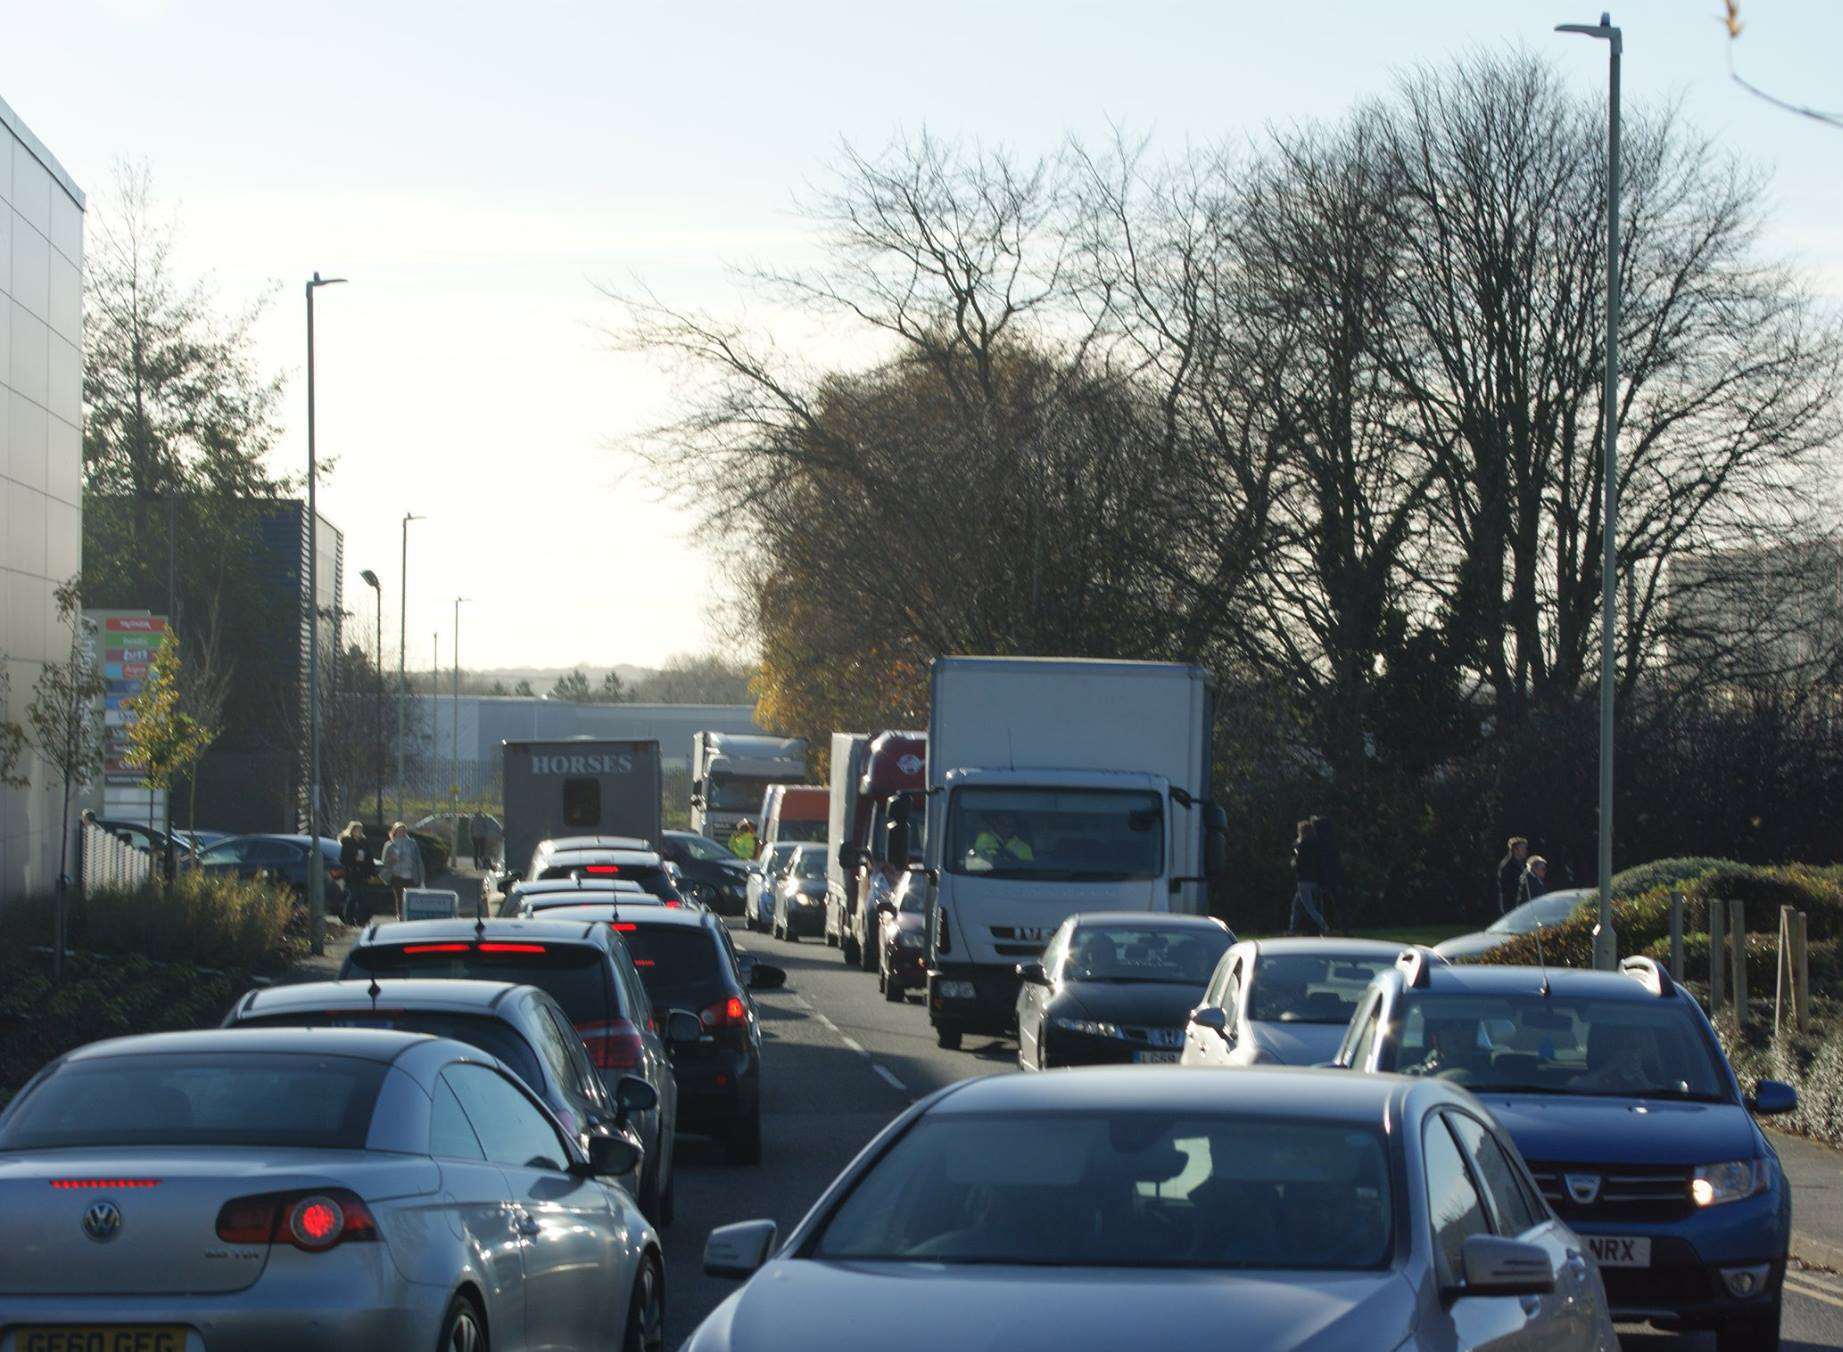 Traffic at Barrey Road, Sevington. Credit: Ian Sharp